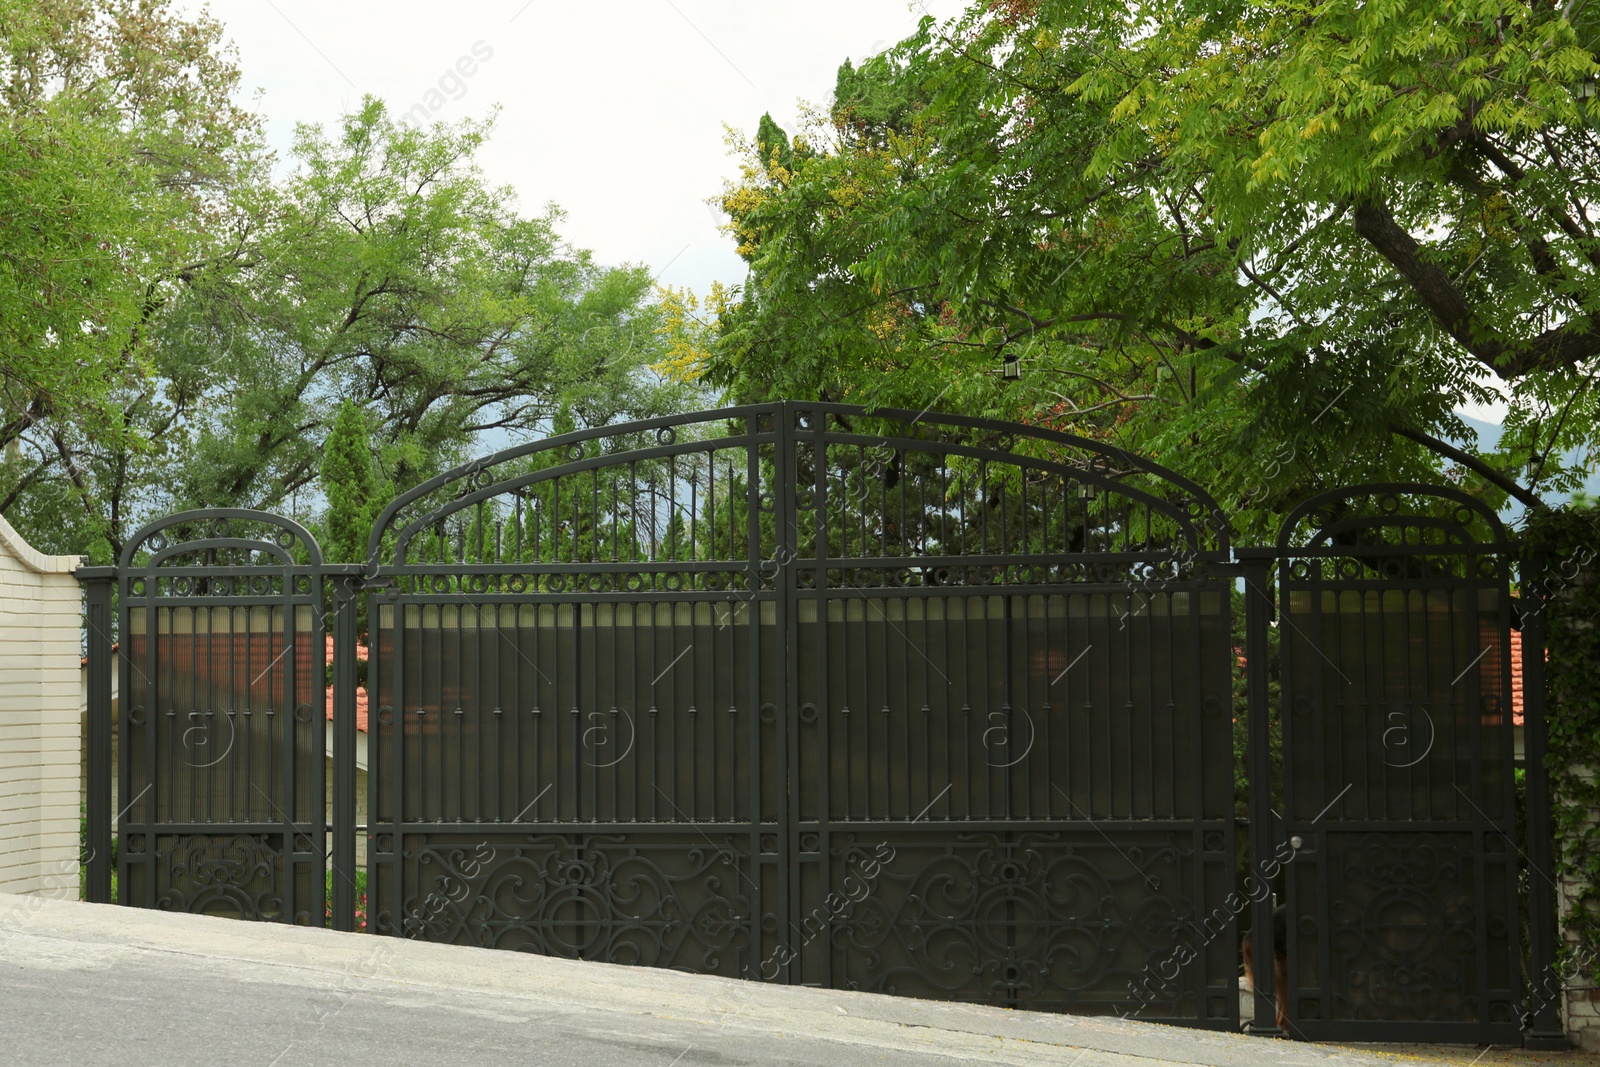 Photo of Closed metal gates near beautiful green trees on city street